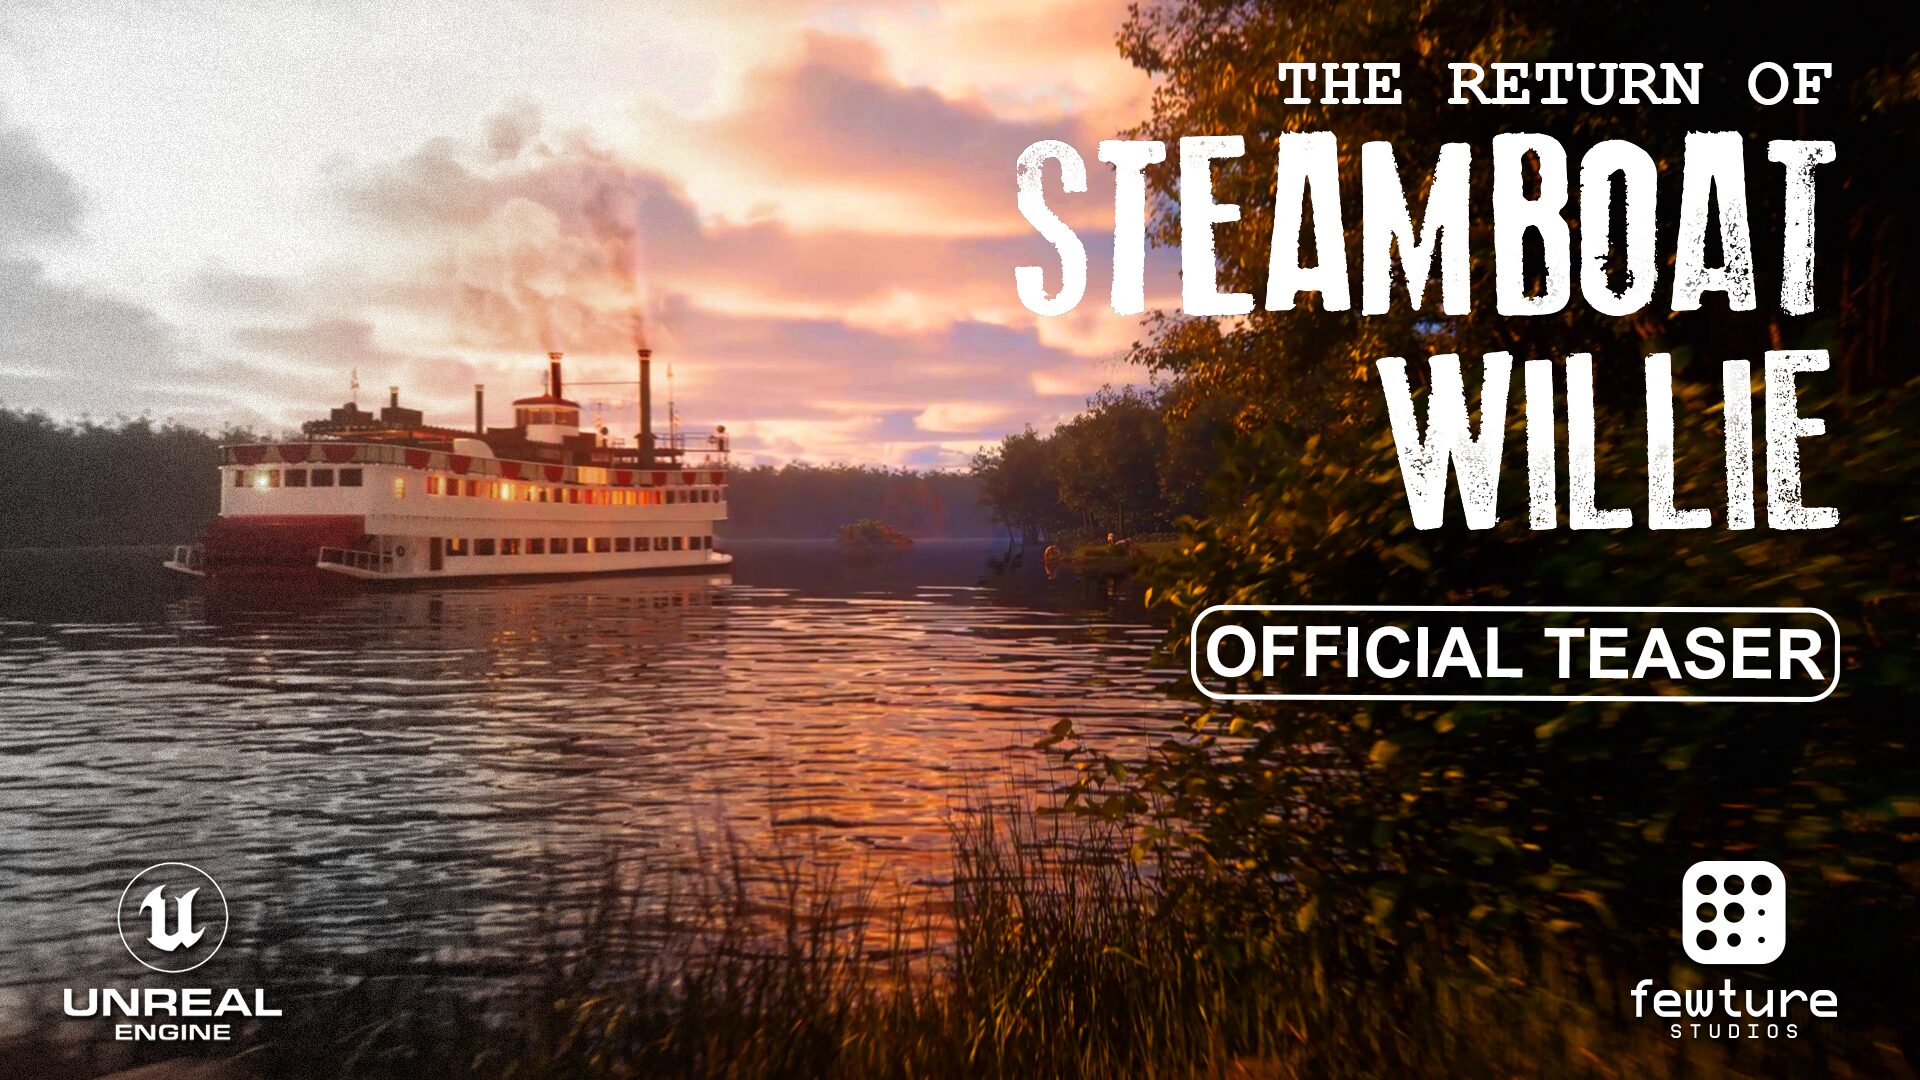 Horror Flik 'The Return of Steamboat Willie' Official Teaser Released